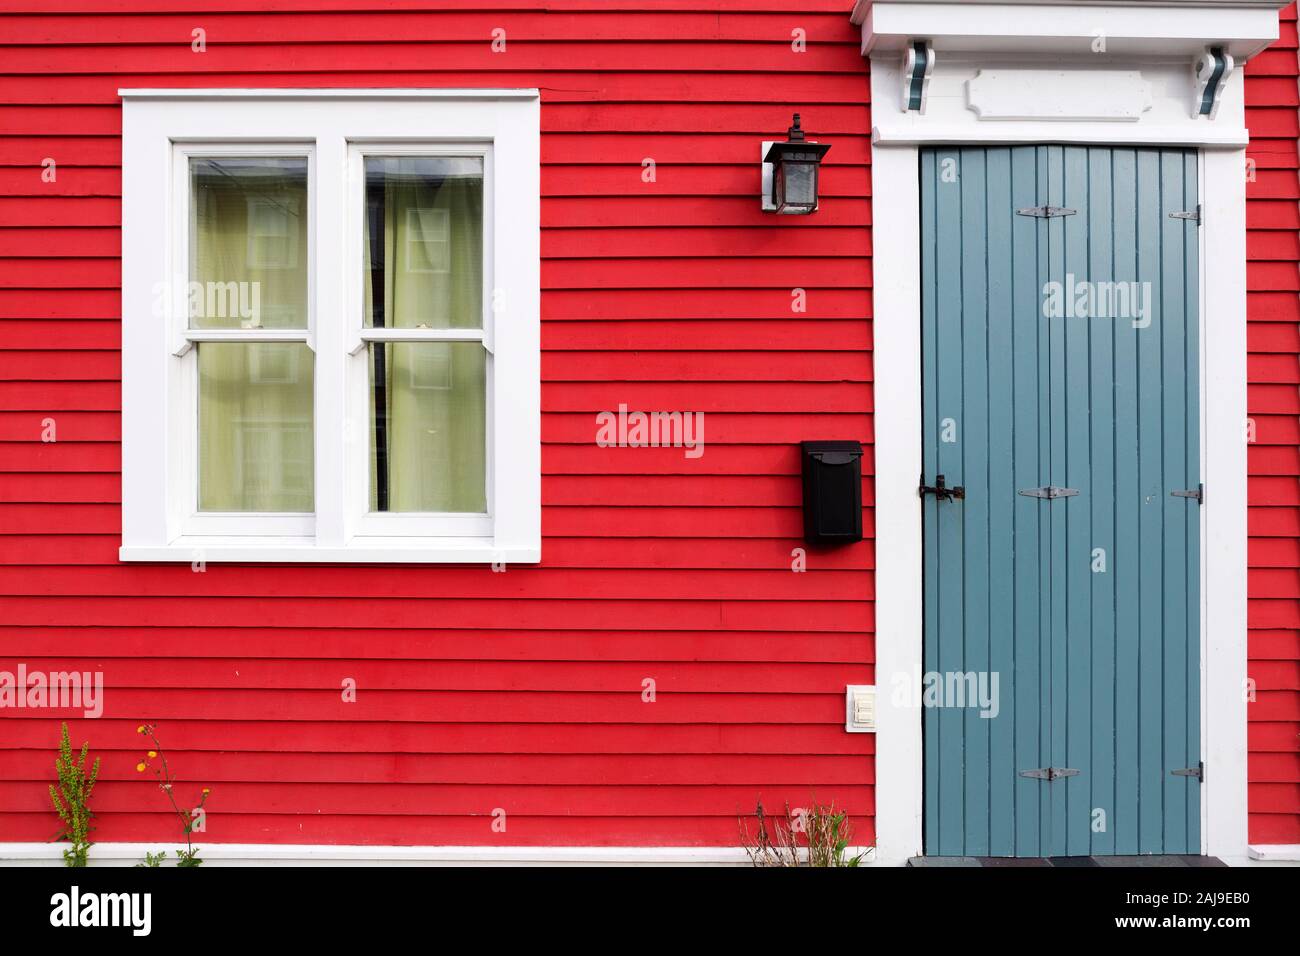 Facade of a red house in St John's, Newfoundland and Labrador, Canada. The house has a grey door. Stock Photo